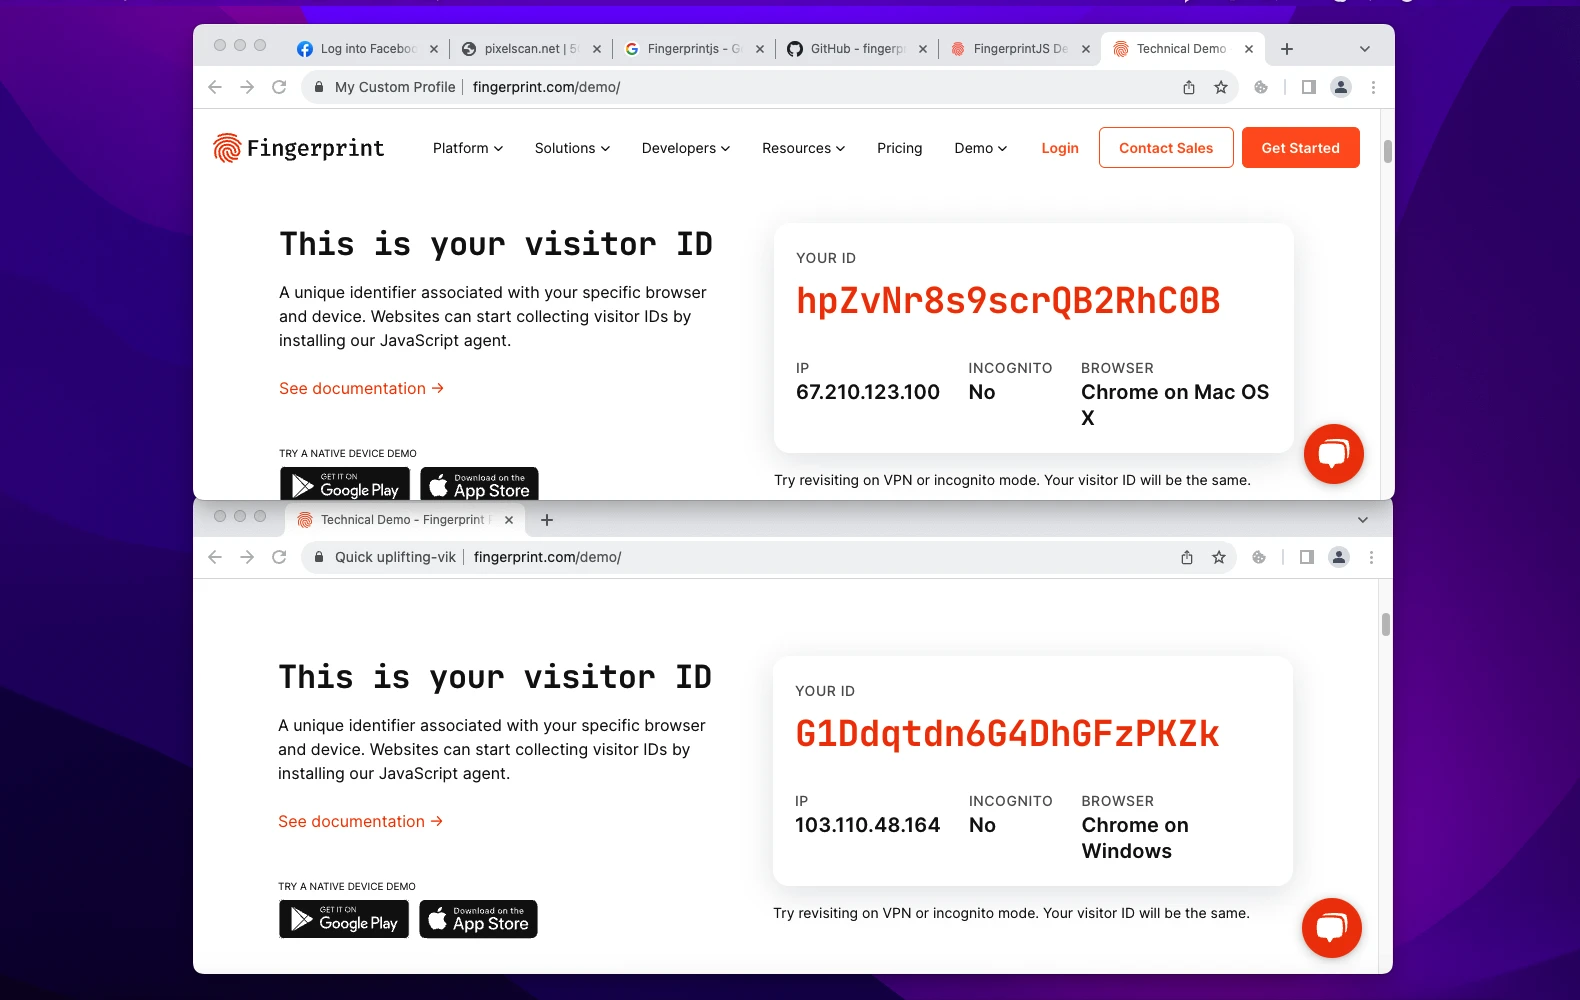 Two Octo Browser Profiles with unique fingerprints